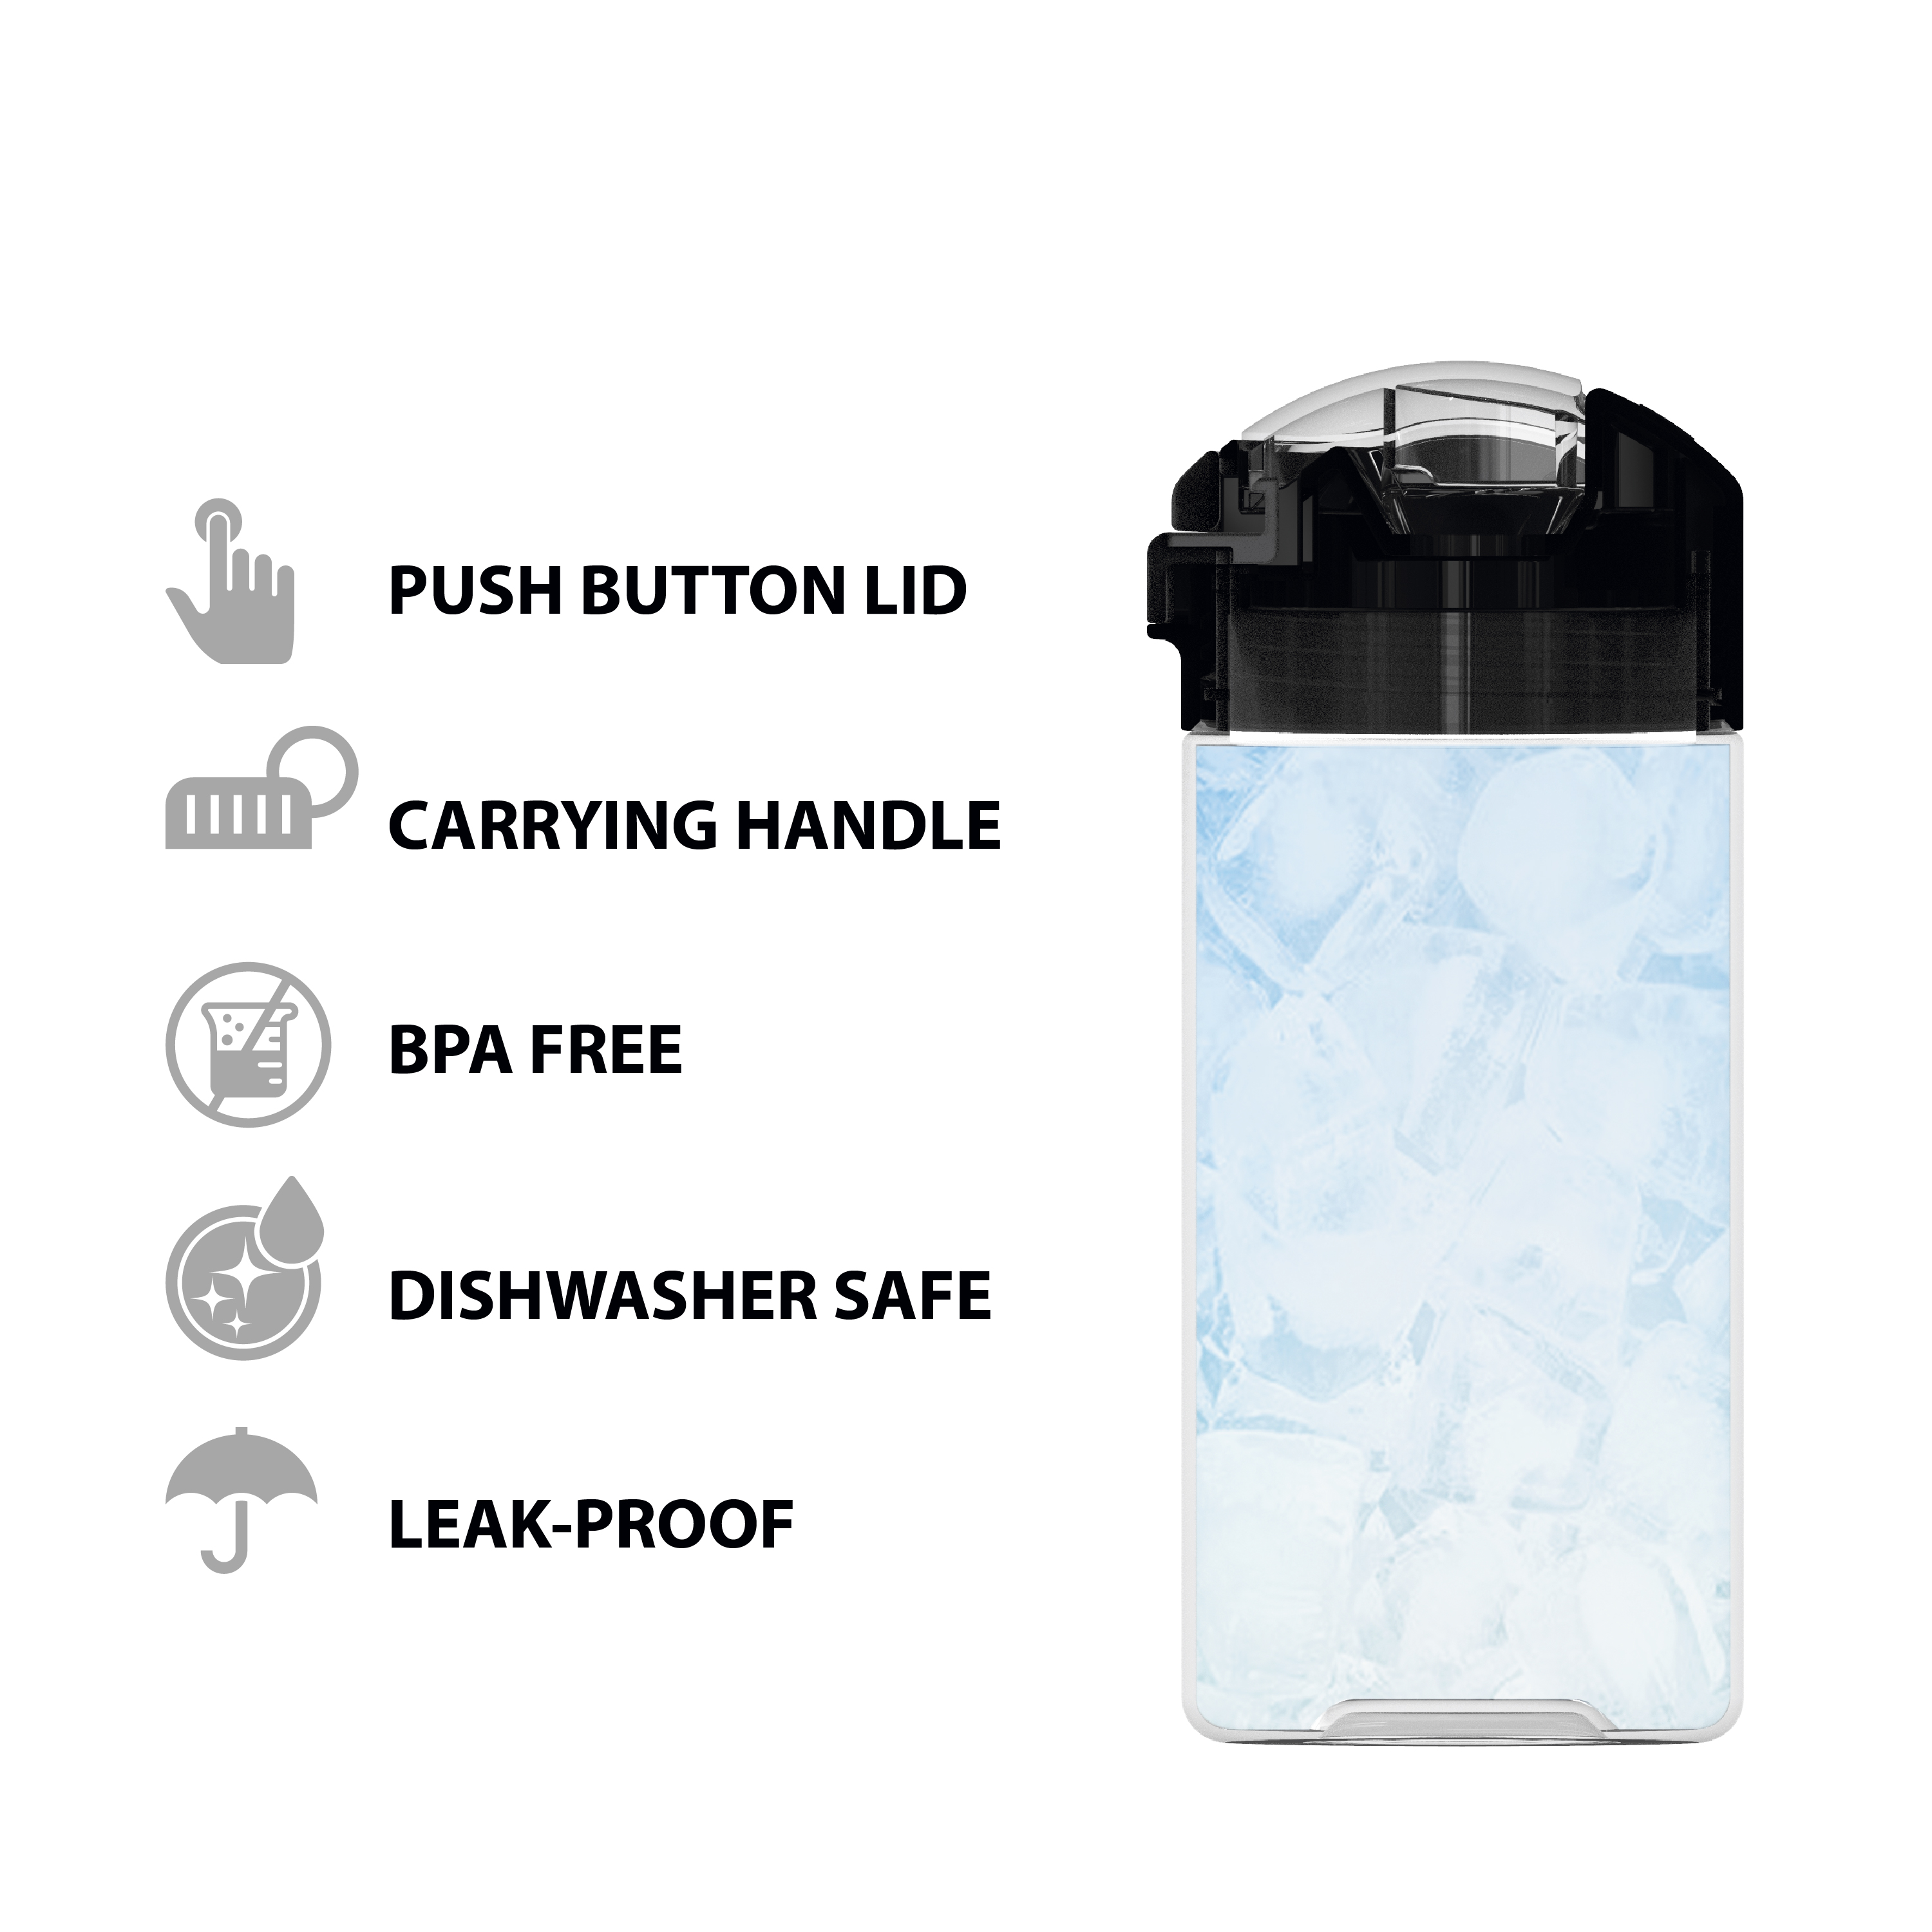 Genesis 18 ounce Reusable Plastic Water Bottle with Push-button lid, Space, 2-piece set slideshow image 8